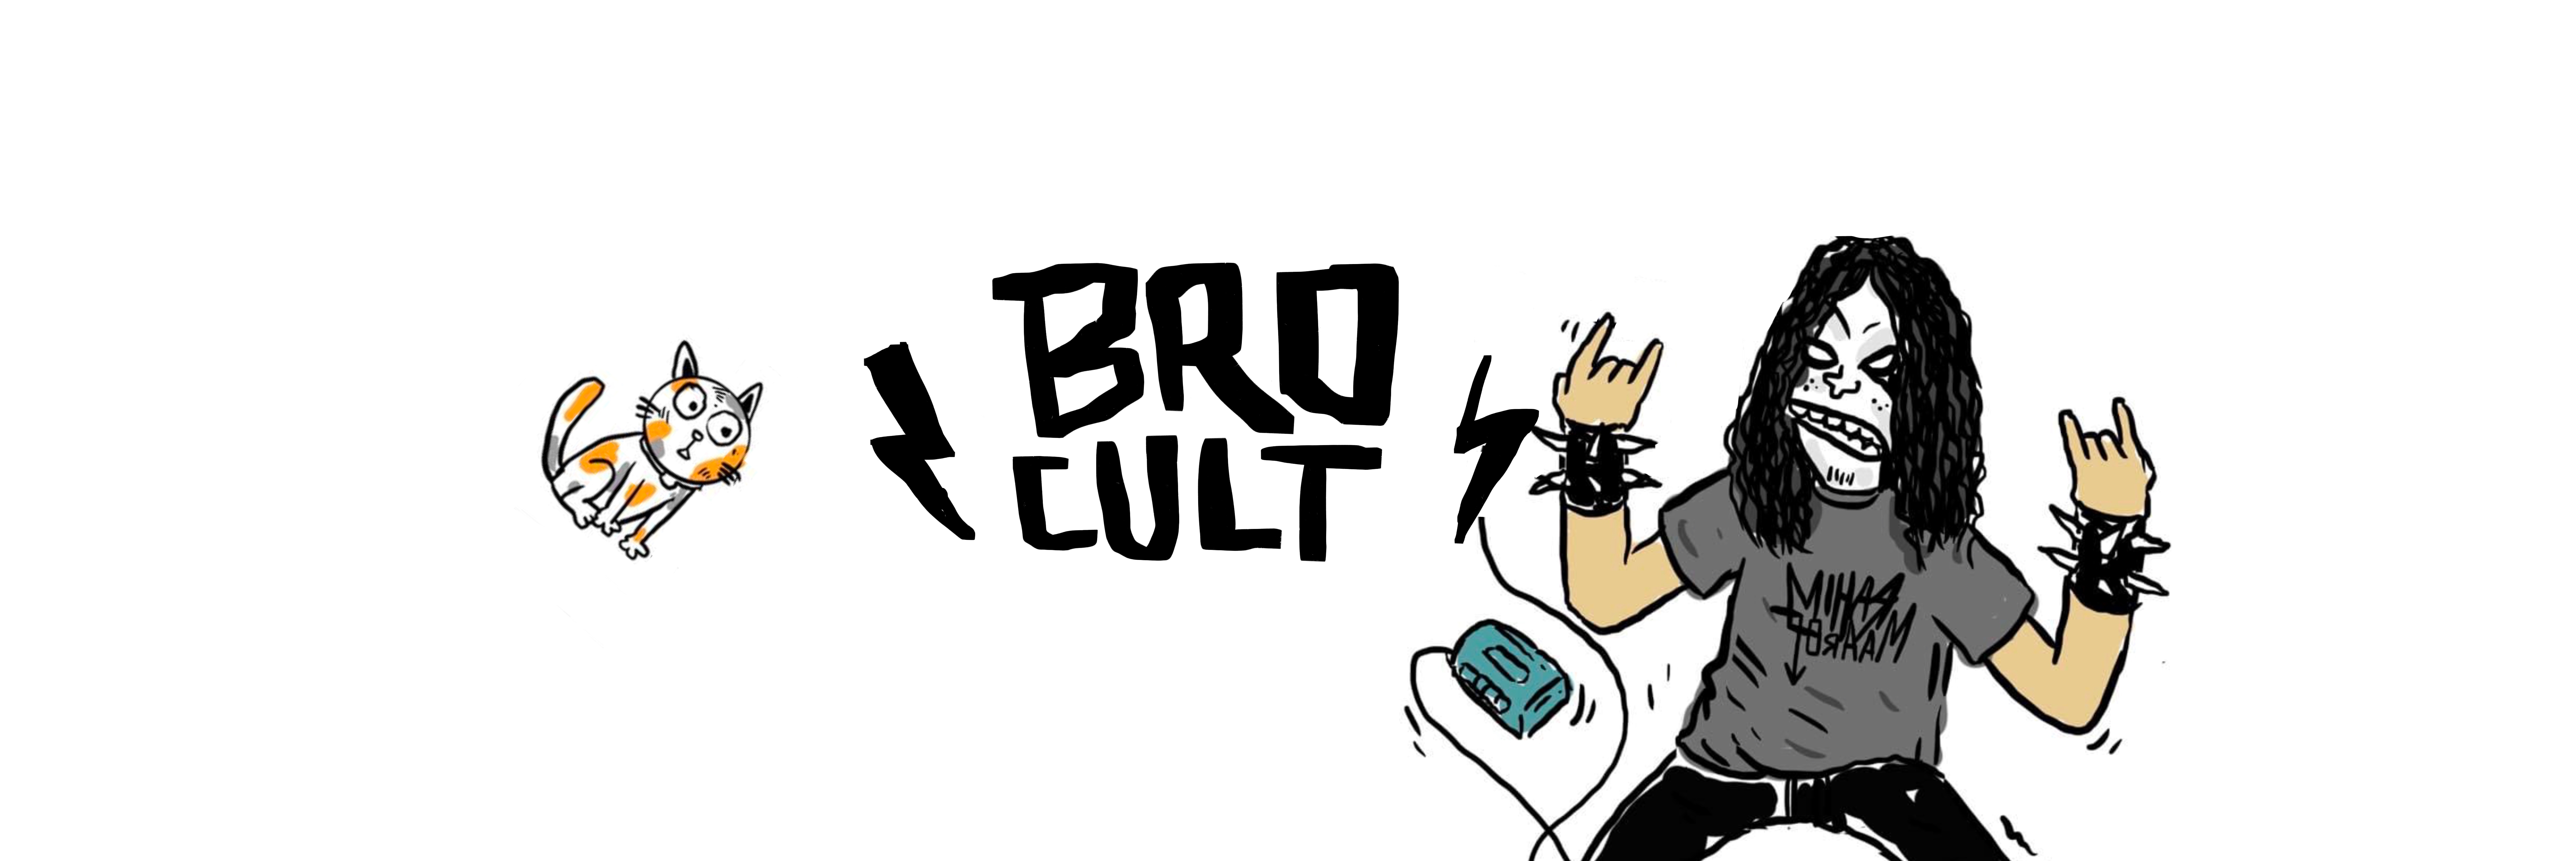 Bro Cult banner